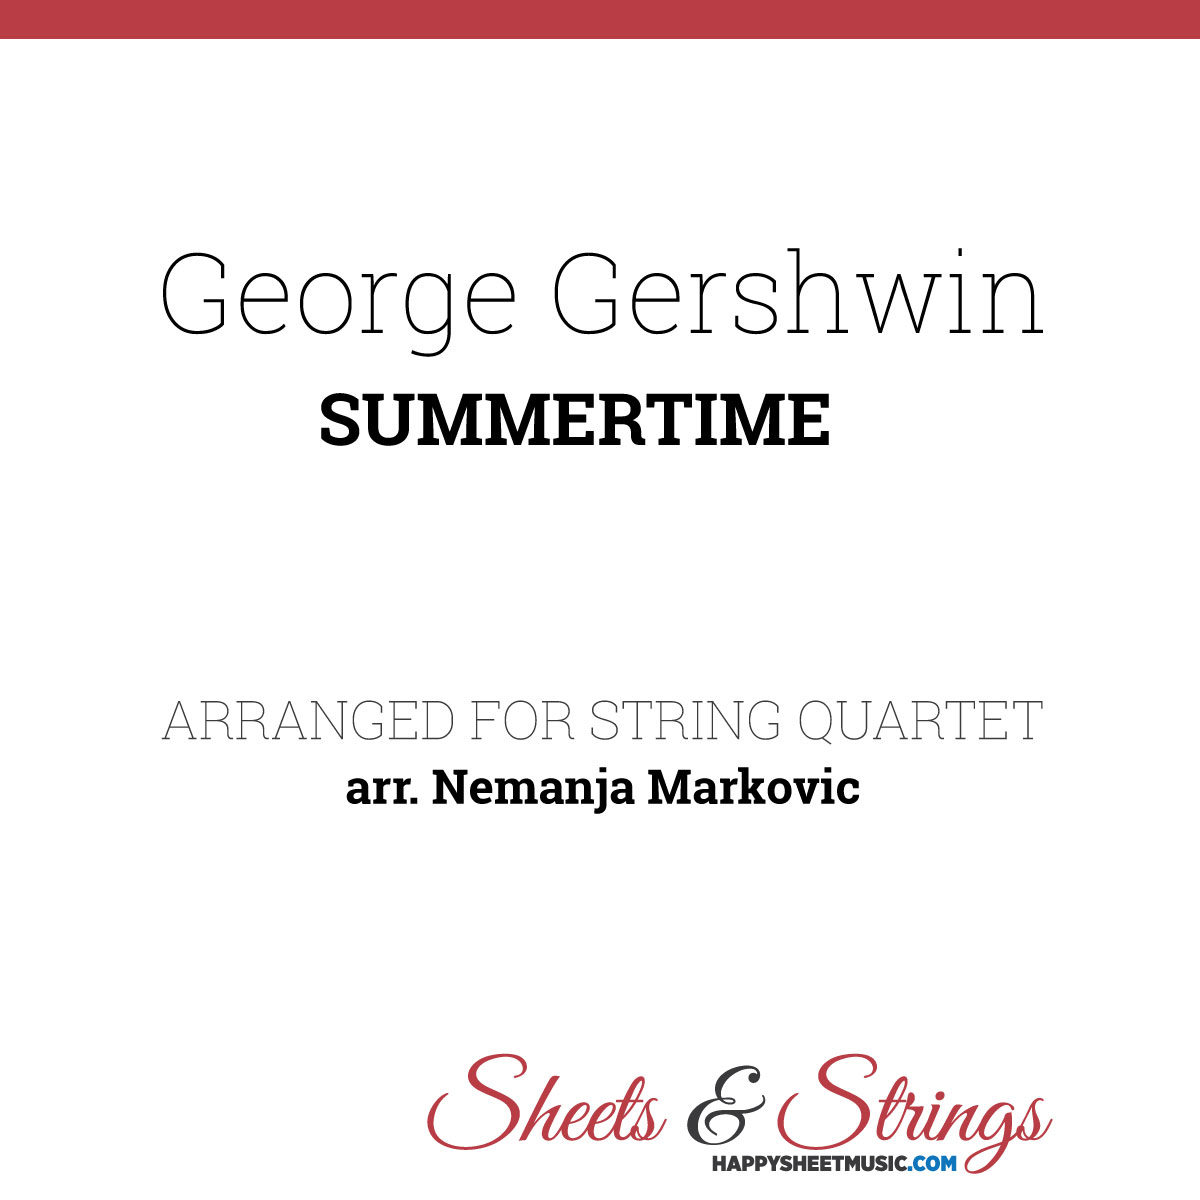 George Gershwin - Summertime - Sheet Music for String Quartet - Music Arrangement for String Quartet